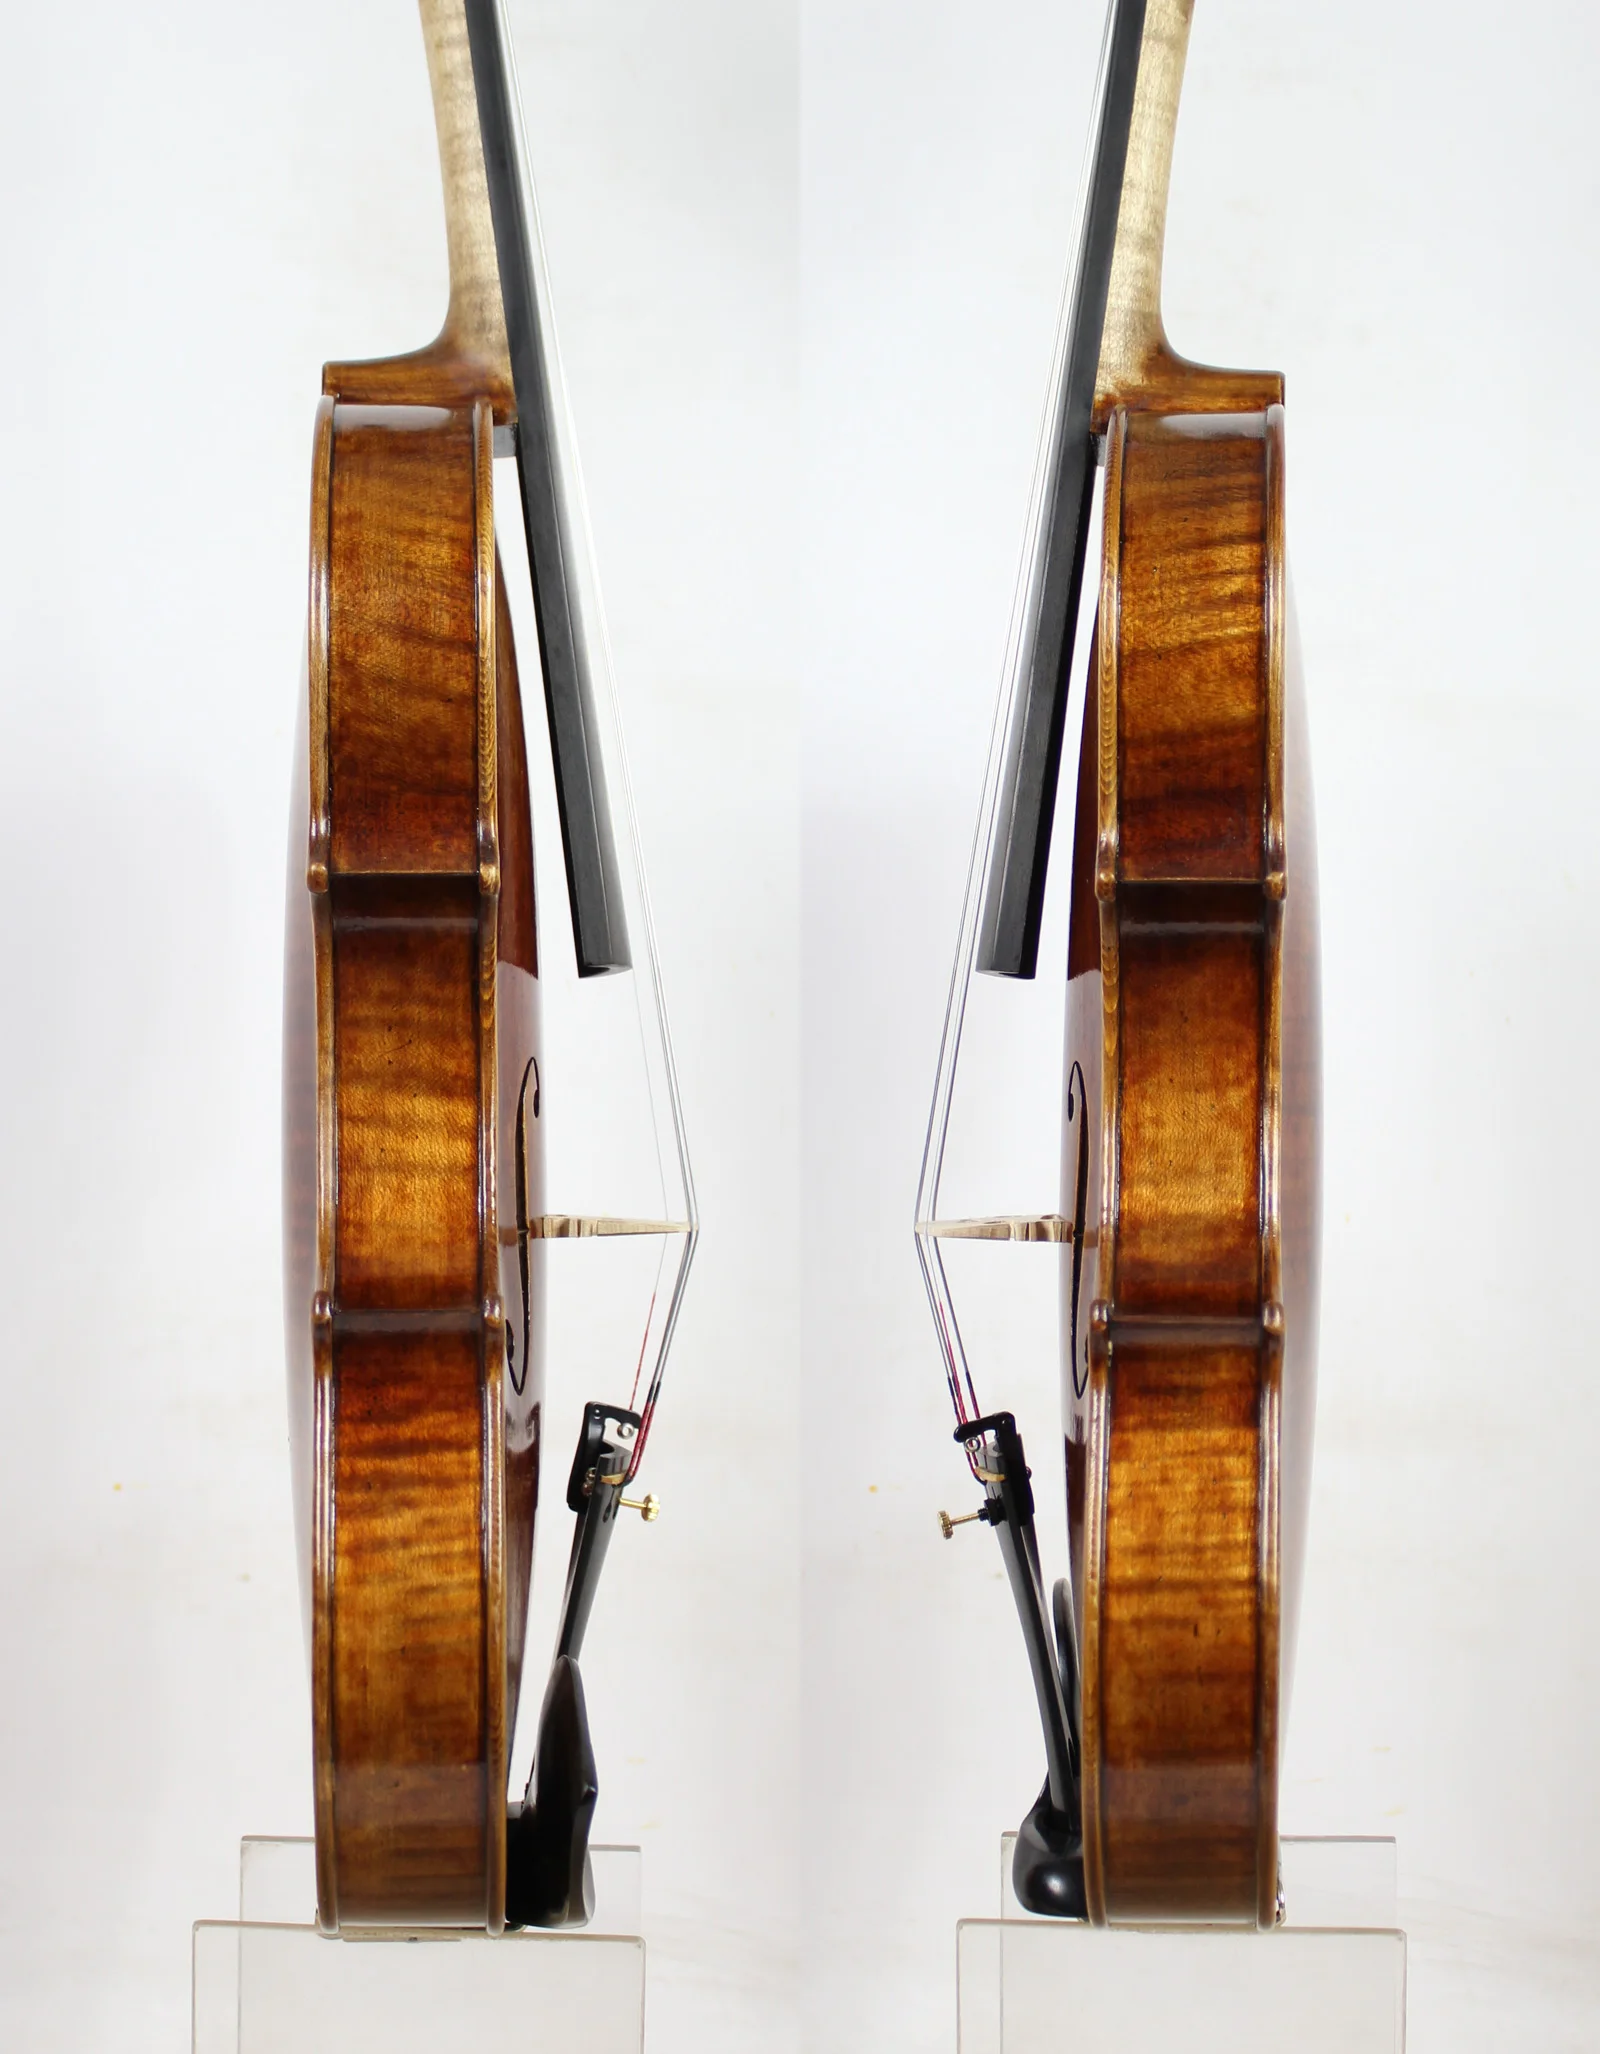 Guarnieri 'del Gesu' 174" Lord Wilton" 4/4 скрипка o копия "All European Wood", масляный лак! лучшее исполнение